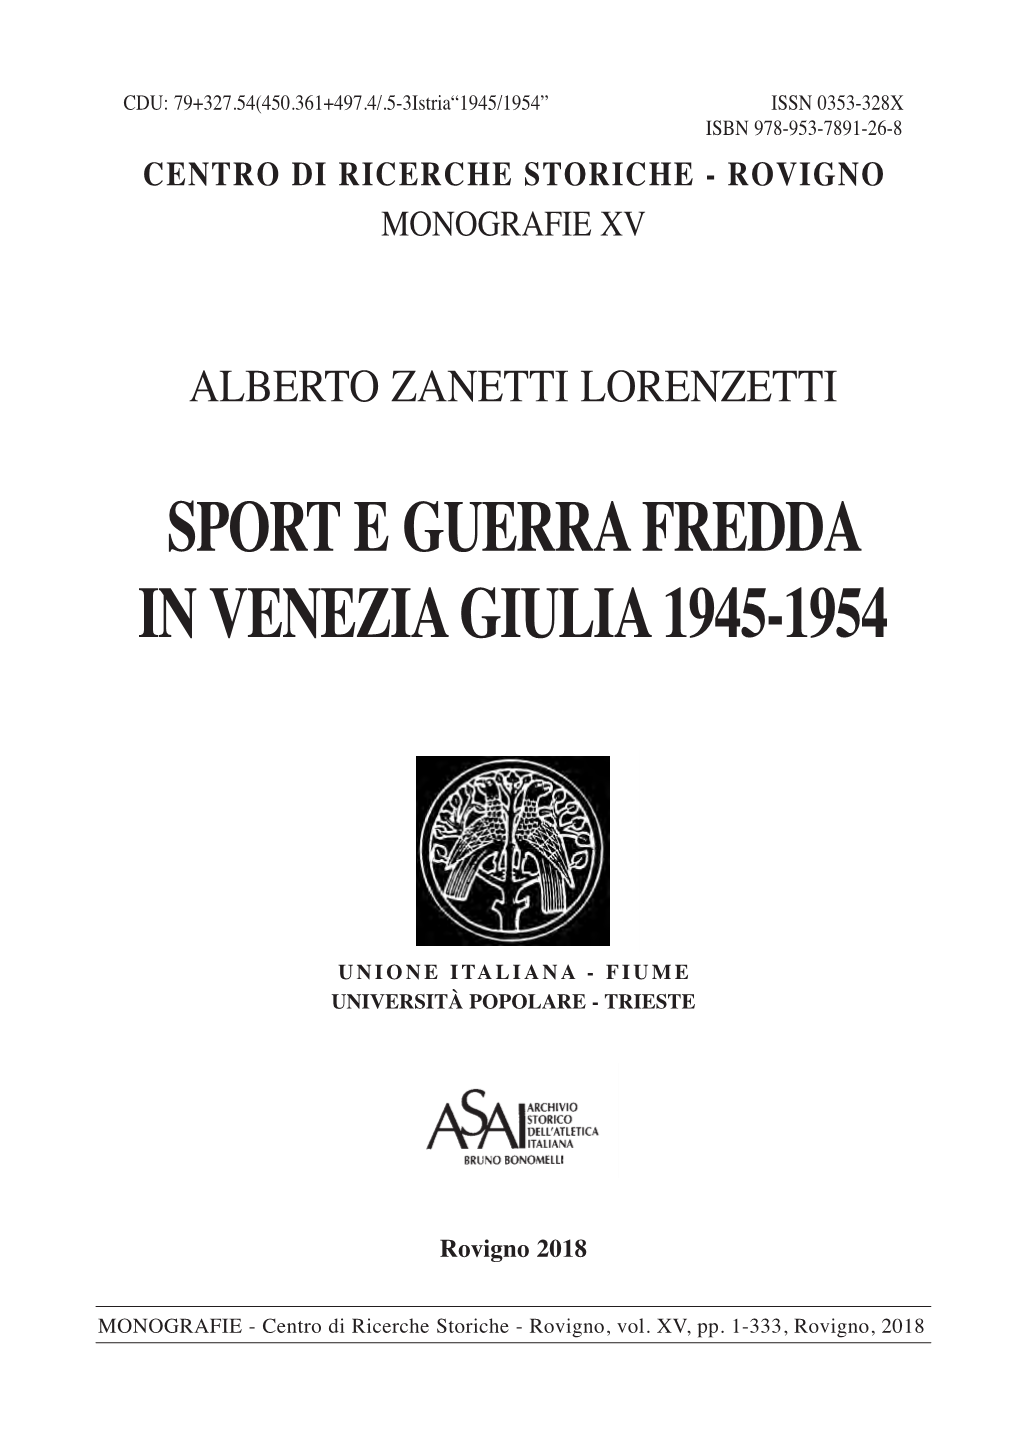 Sport E in Venez Sport E Guerra Fredda in Venezia